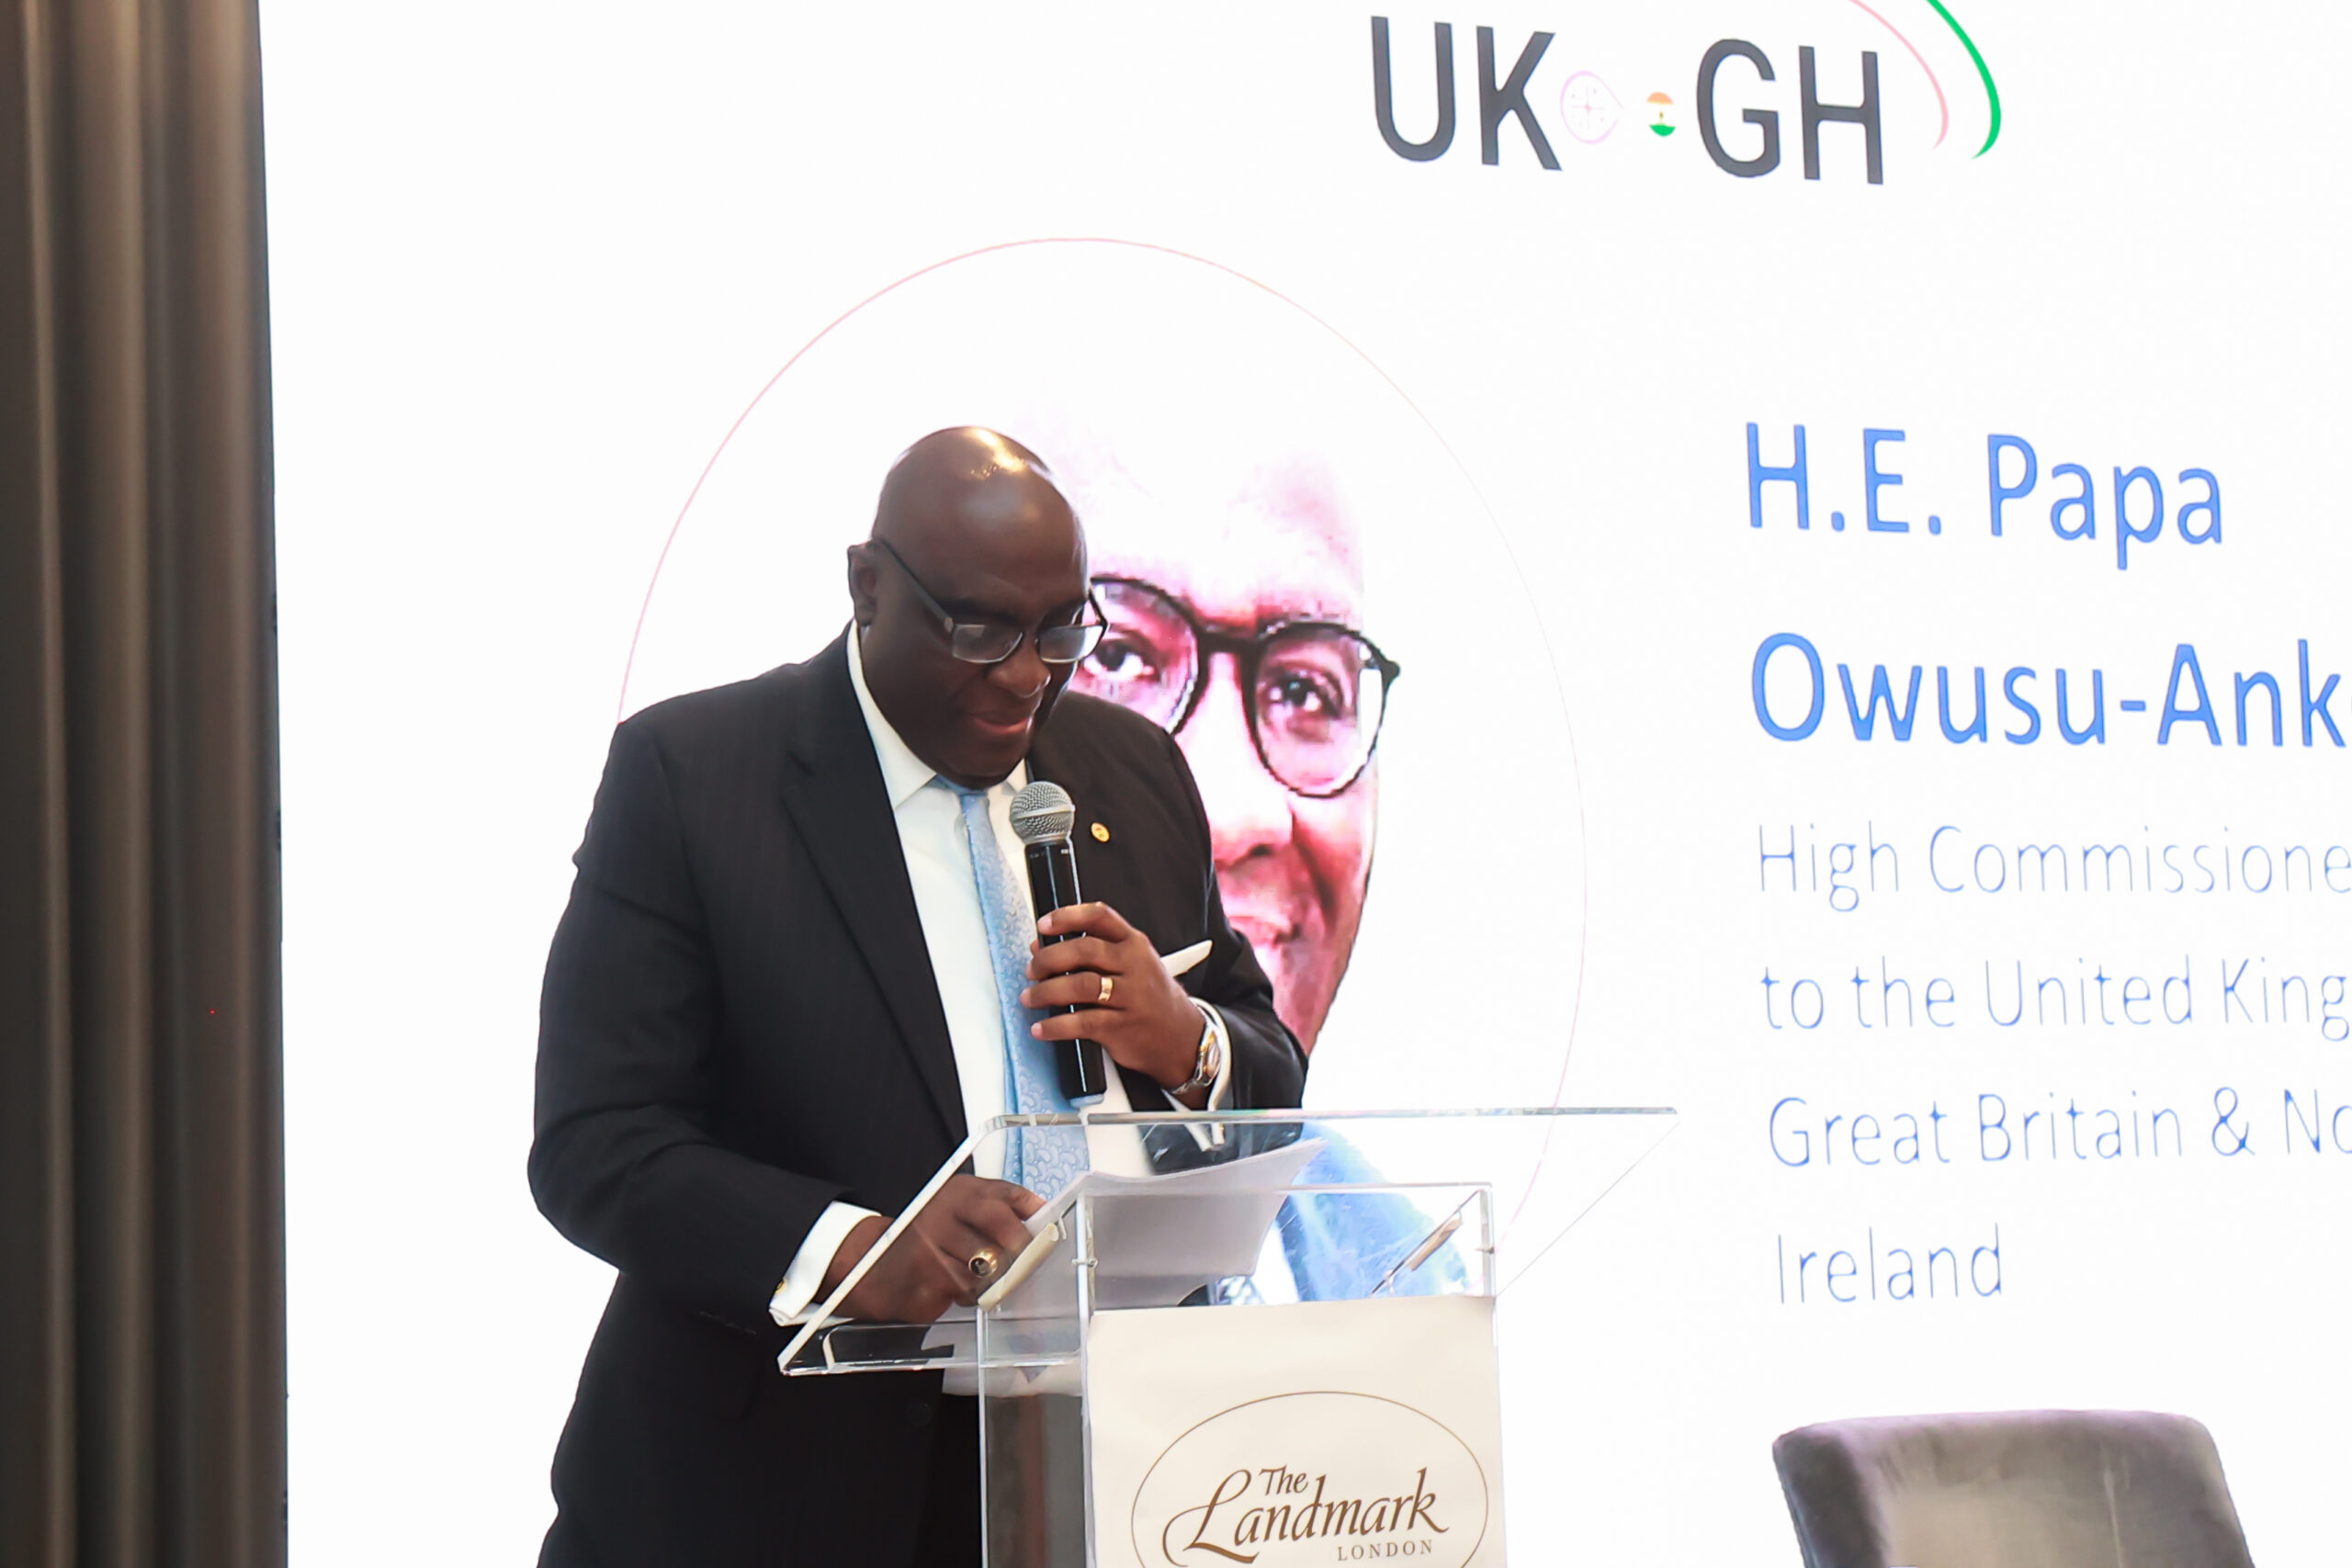 UK Ghana Business Forum 2024